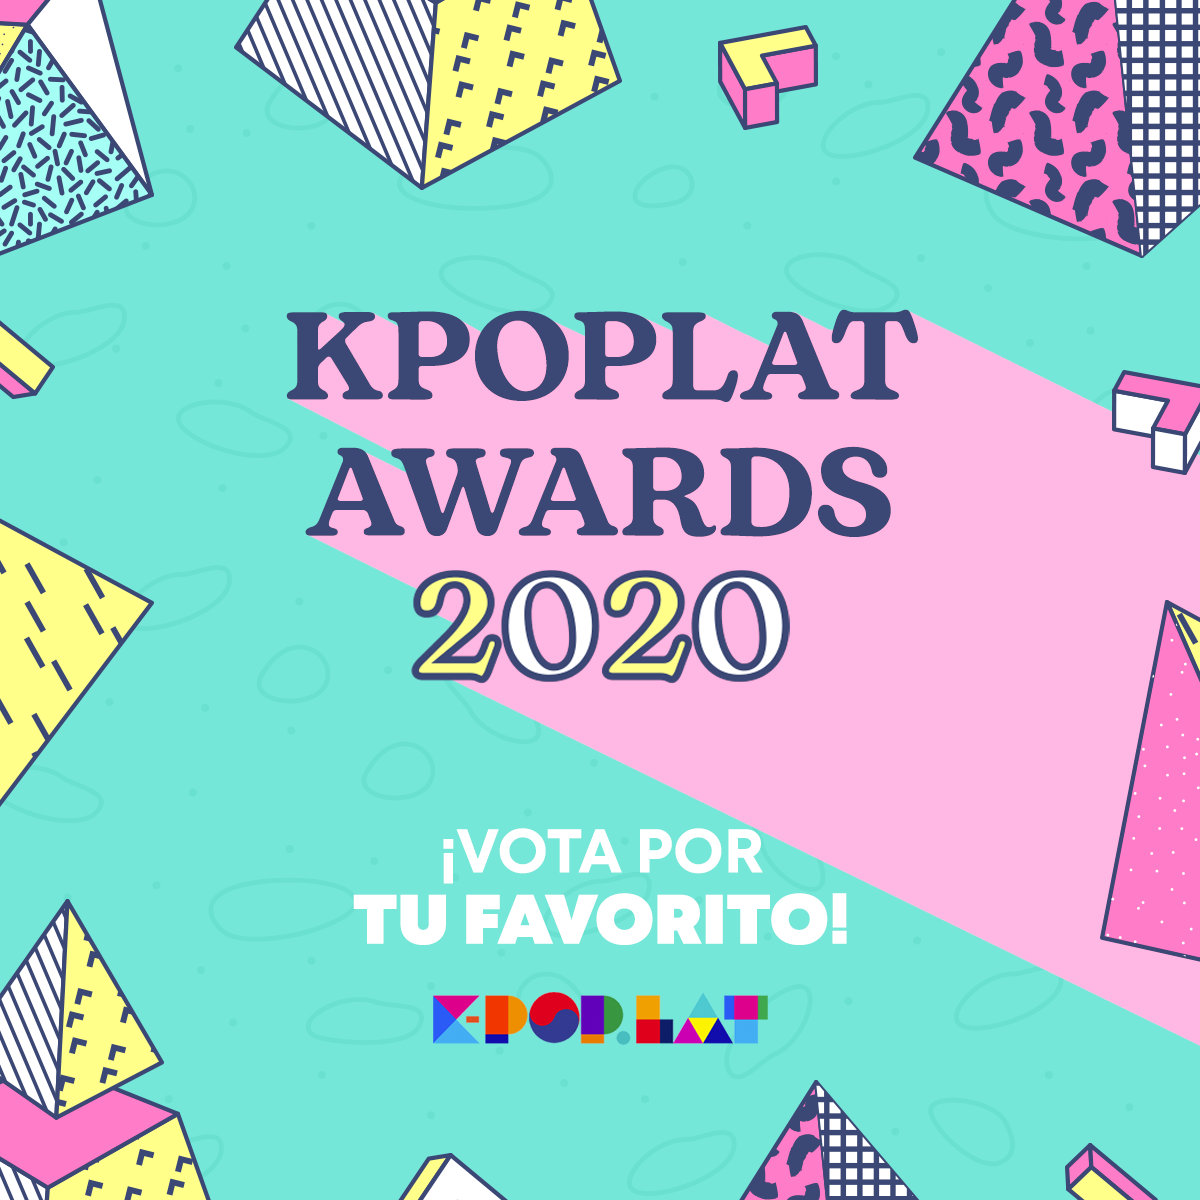 [KPOPLAT AWARDS 2020] VOTA para elegir lo mejor de Corea en América Latina